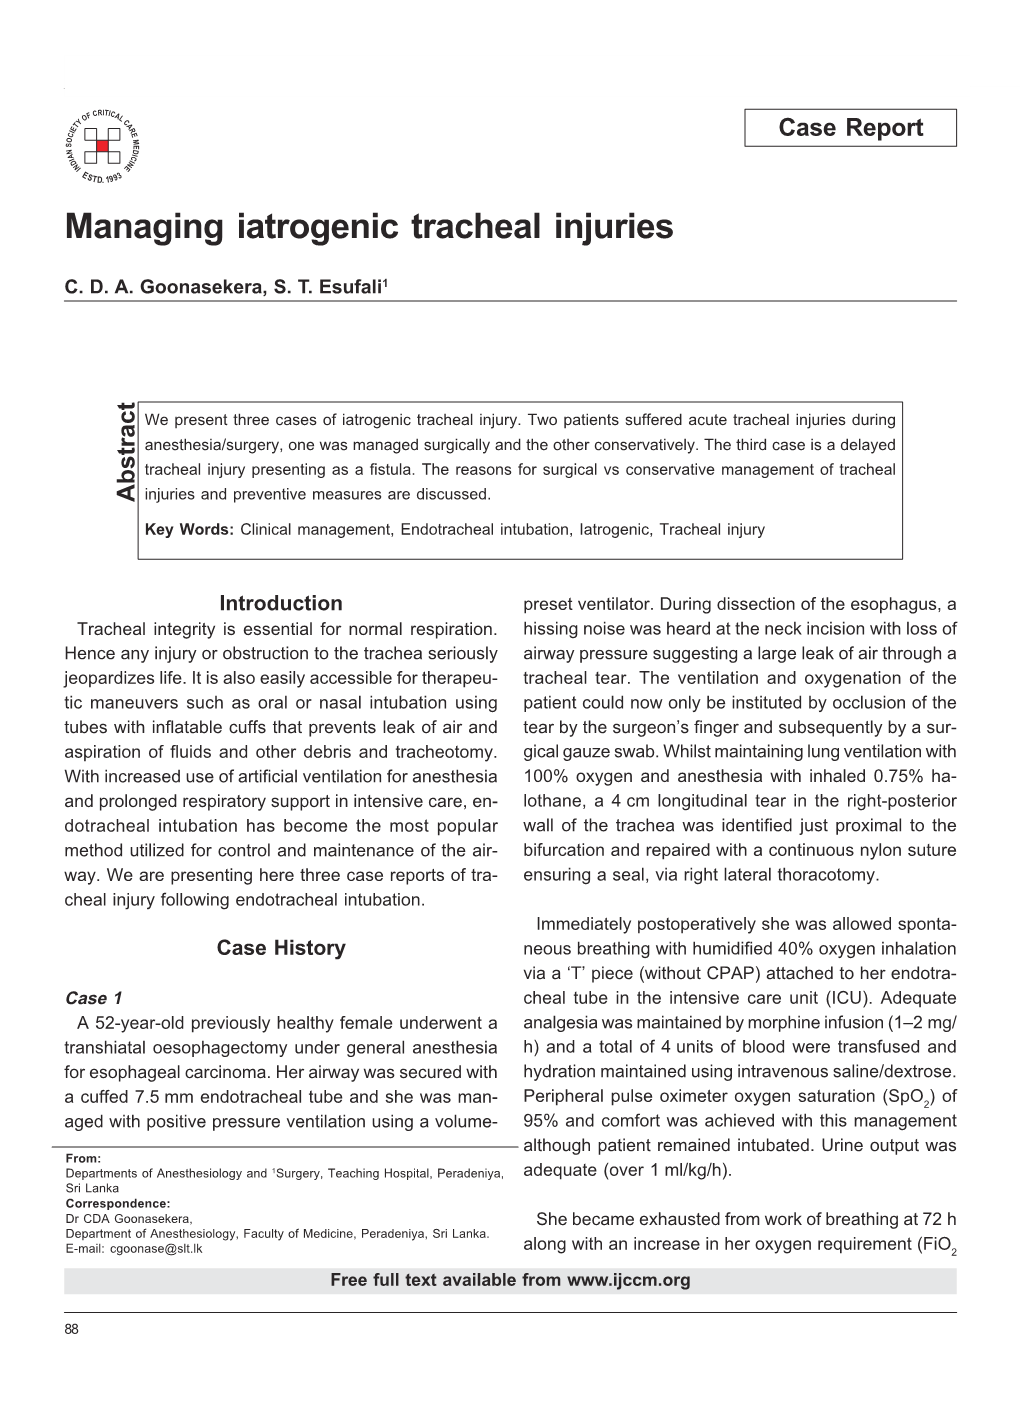 Managing Iatrogenic Tracheal Injuries